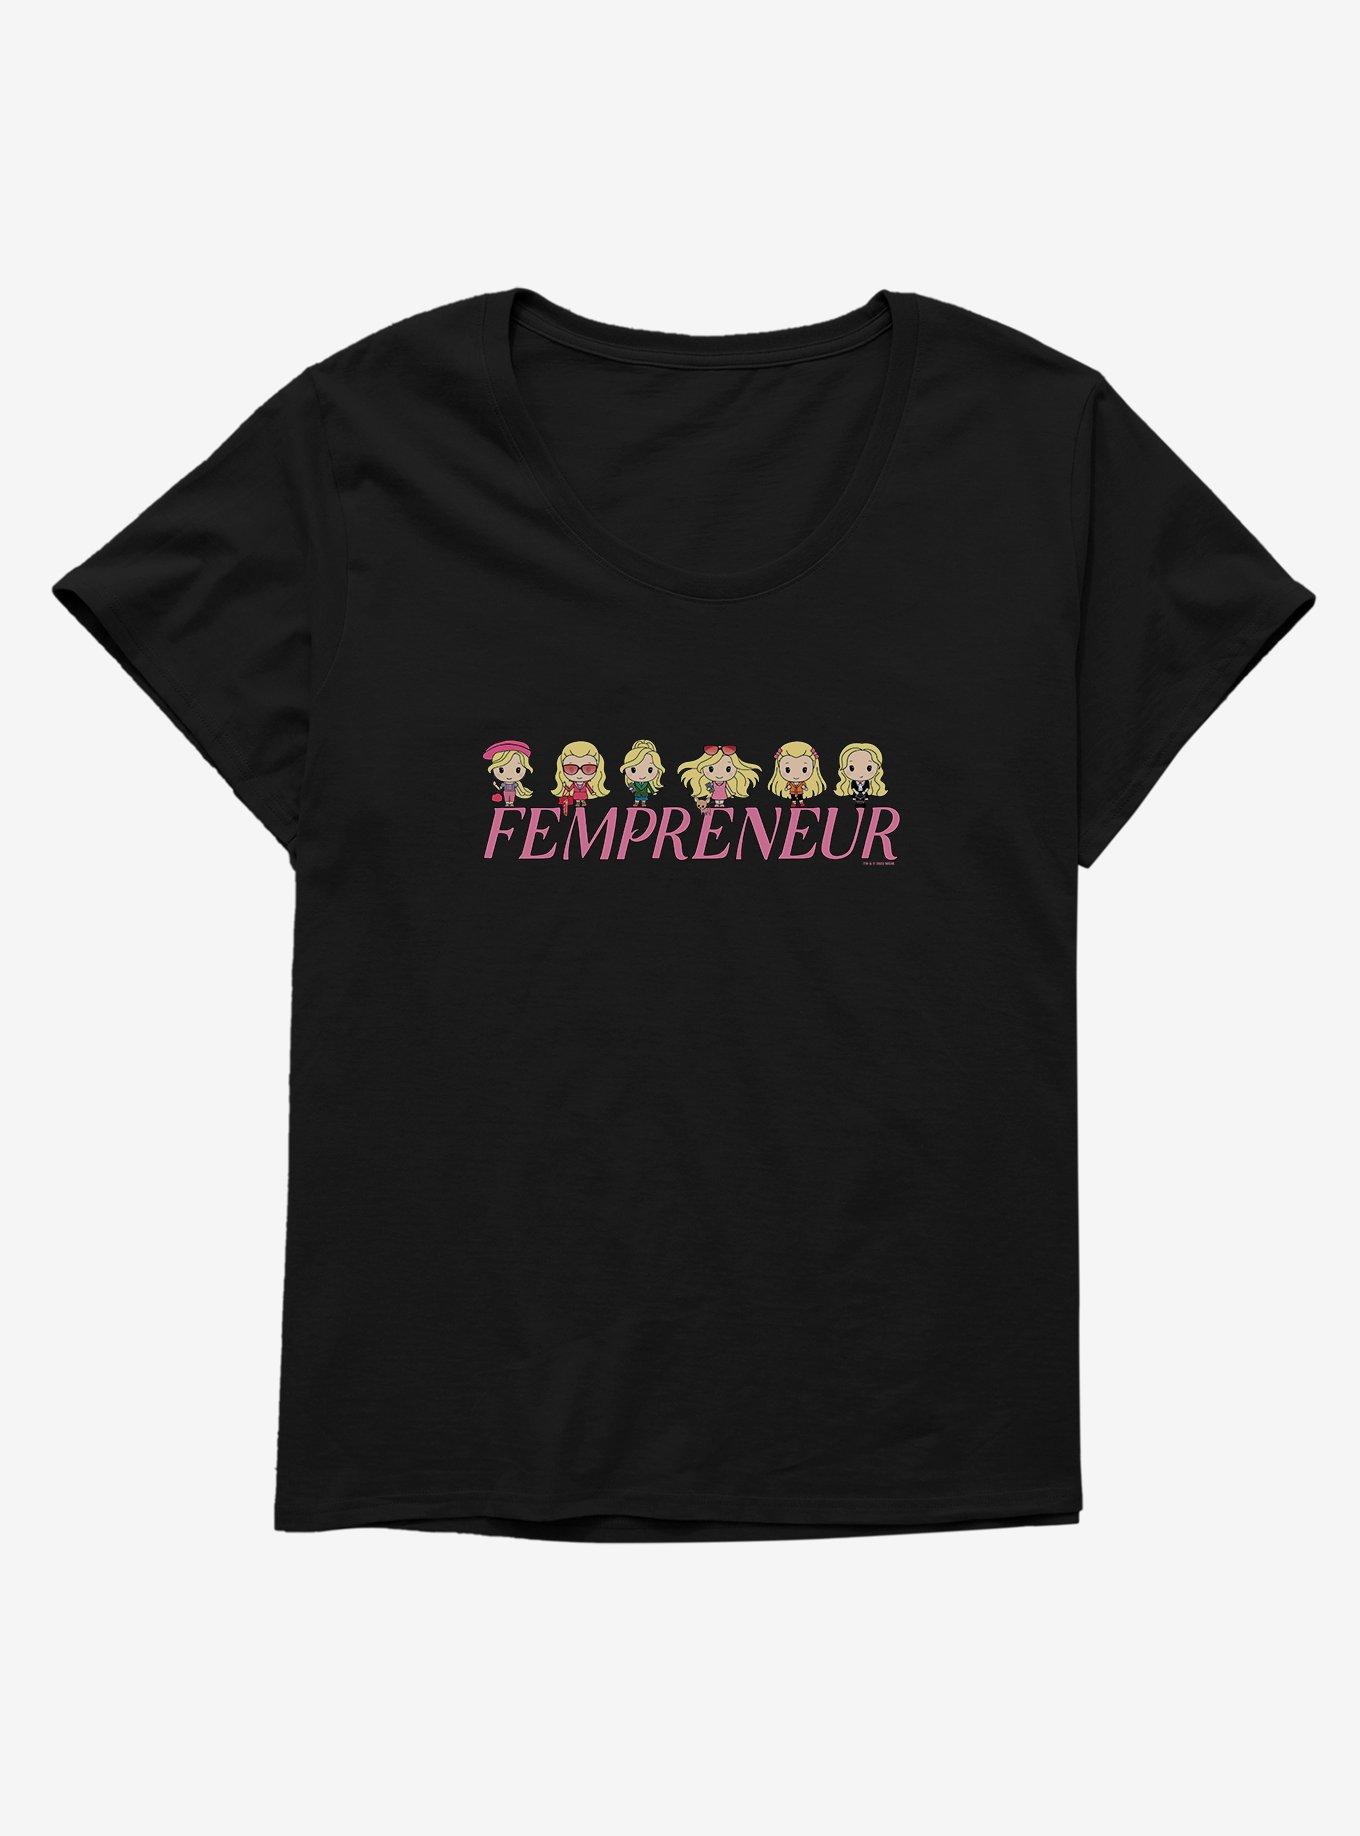 Legally Blonde Fempreneur Womens T-Shirt Plus Size, , hi-res